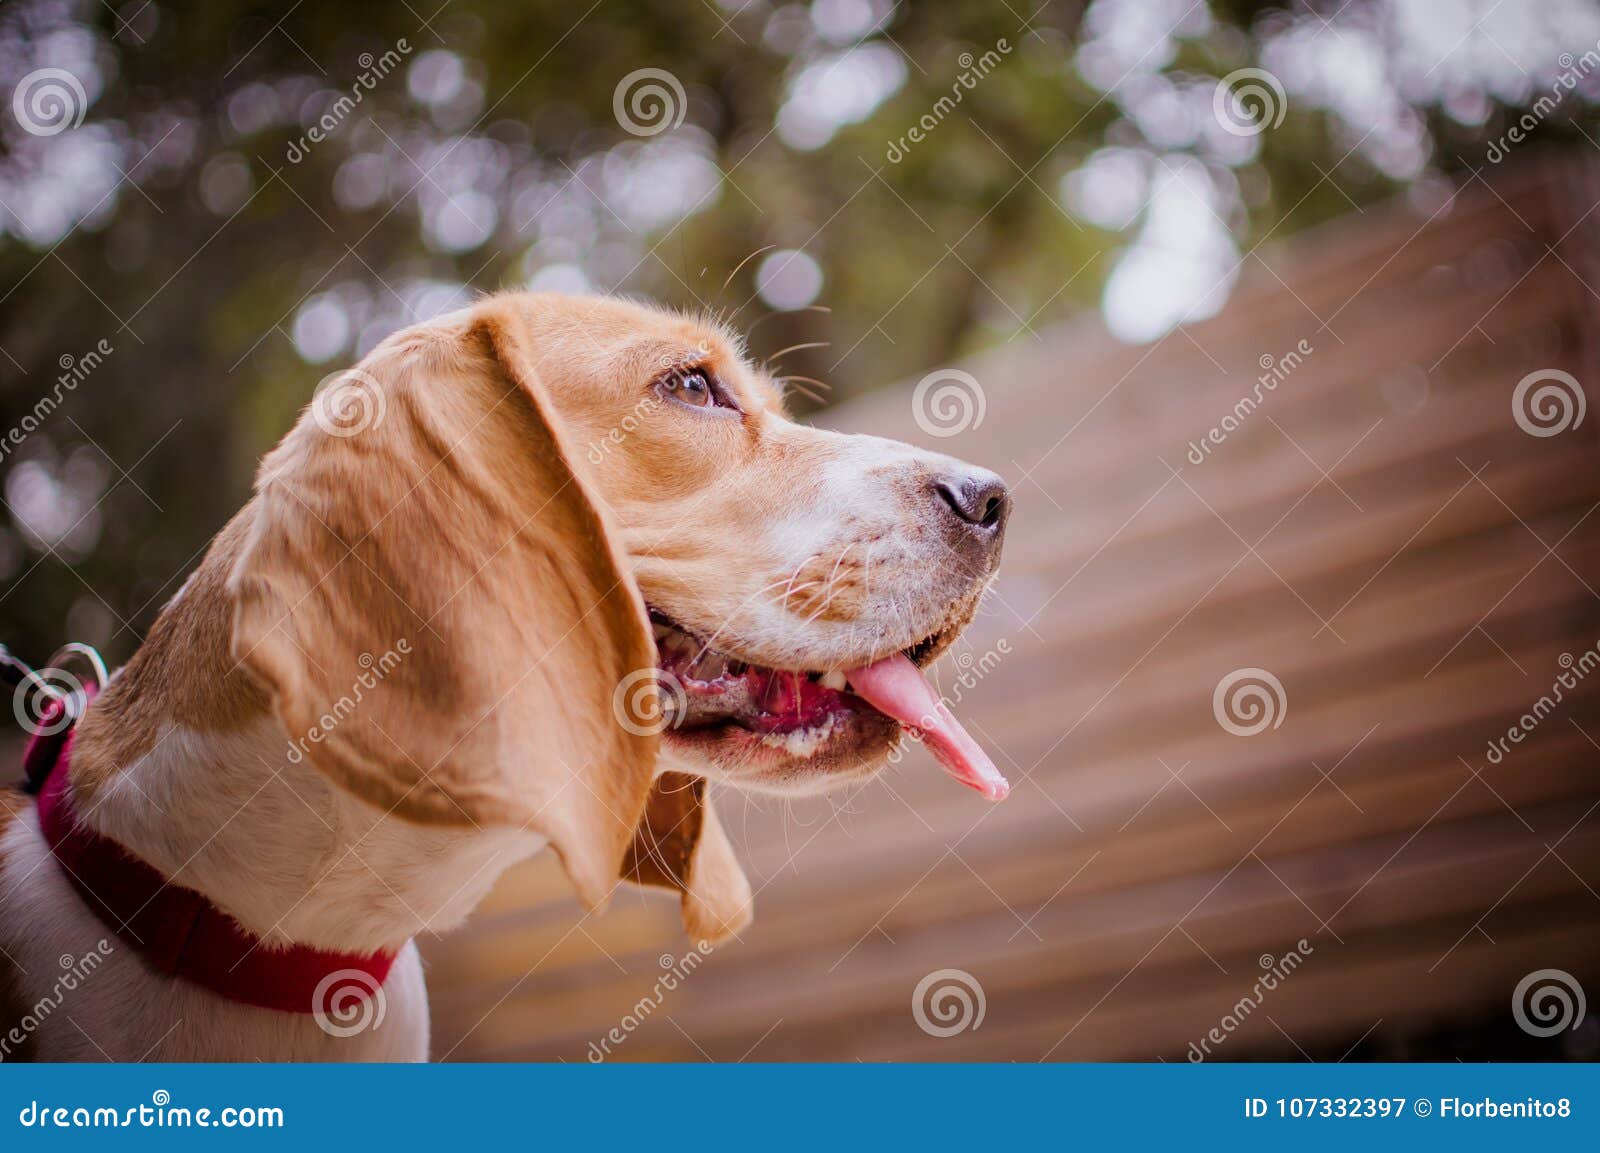 perro de raza beagle sacando la lengua